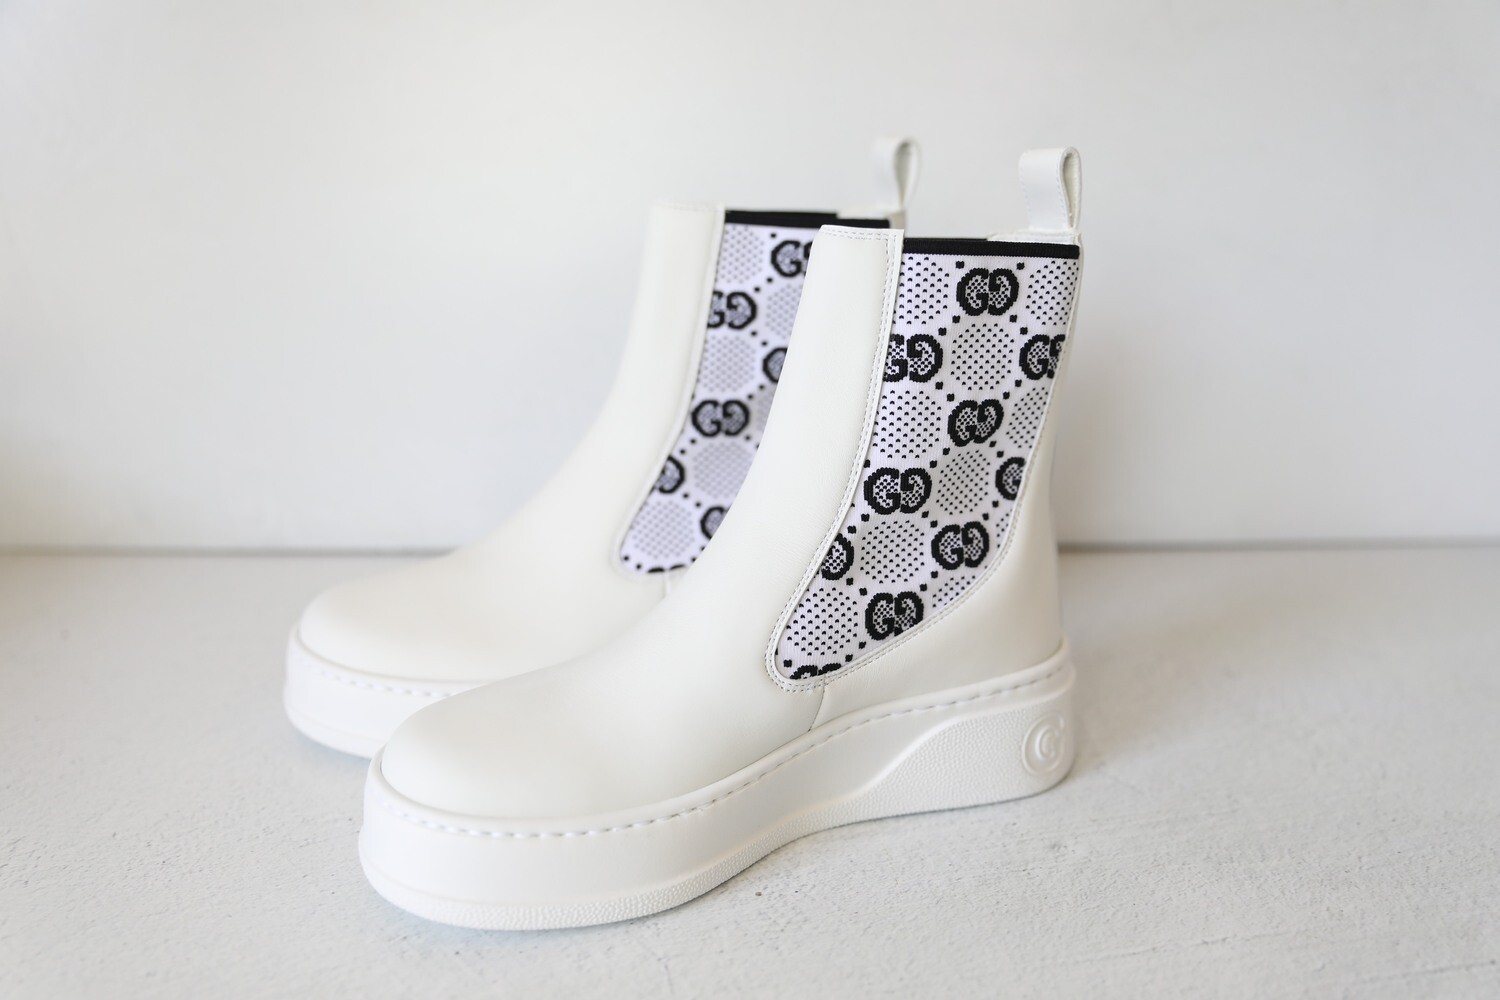 Gucci Rain Boots Short, White with Monogram, Size 36, New in Box WA001